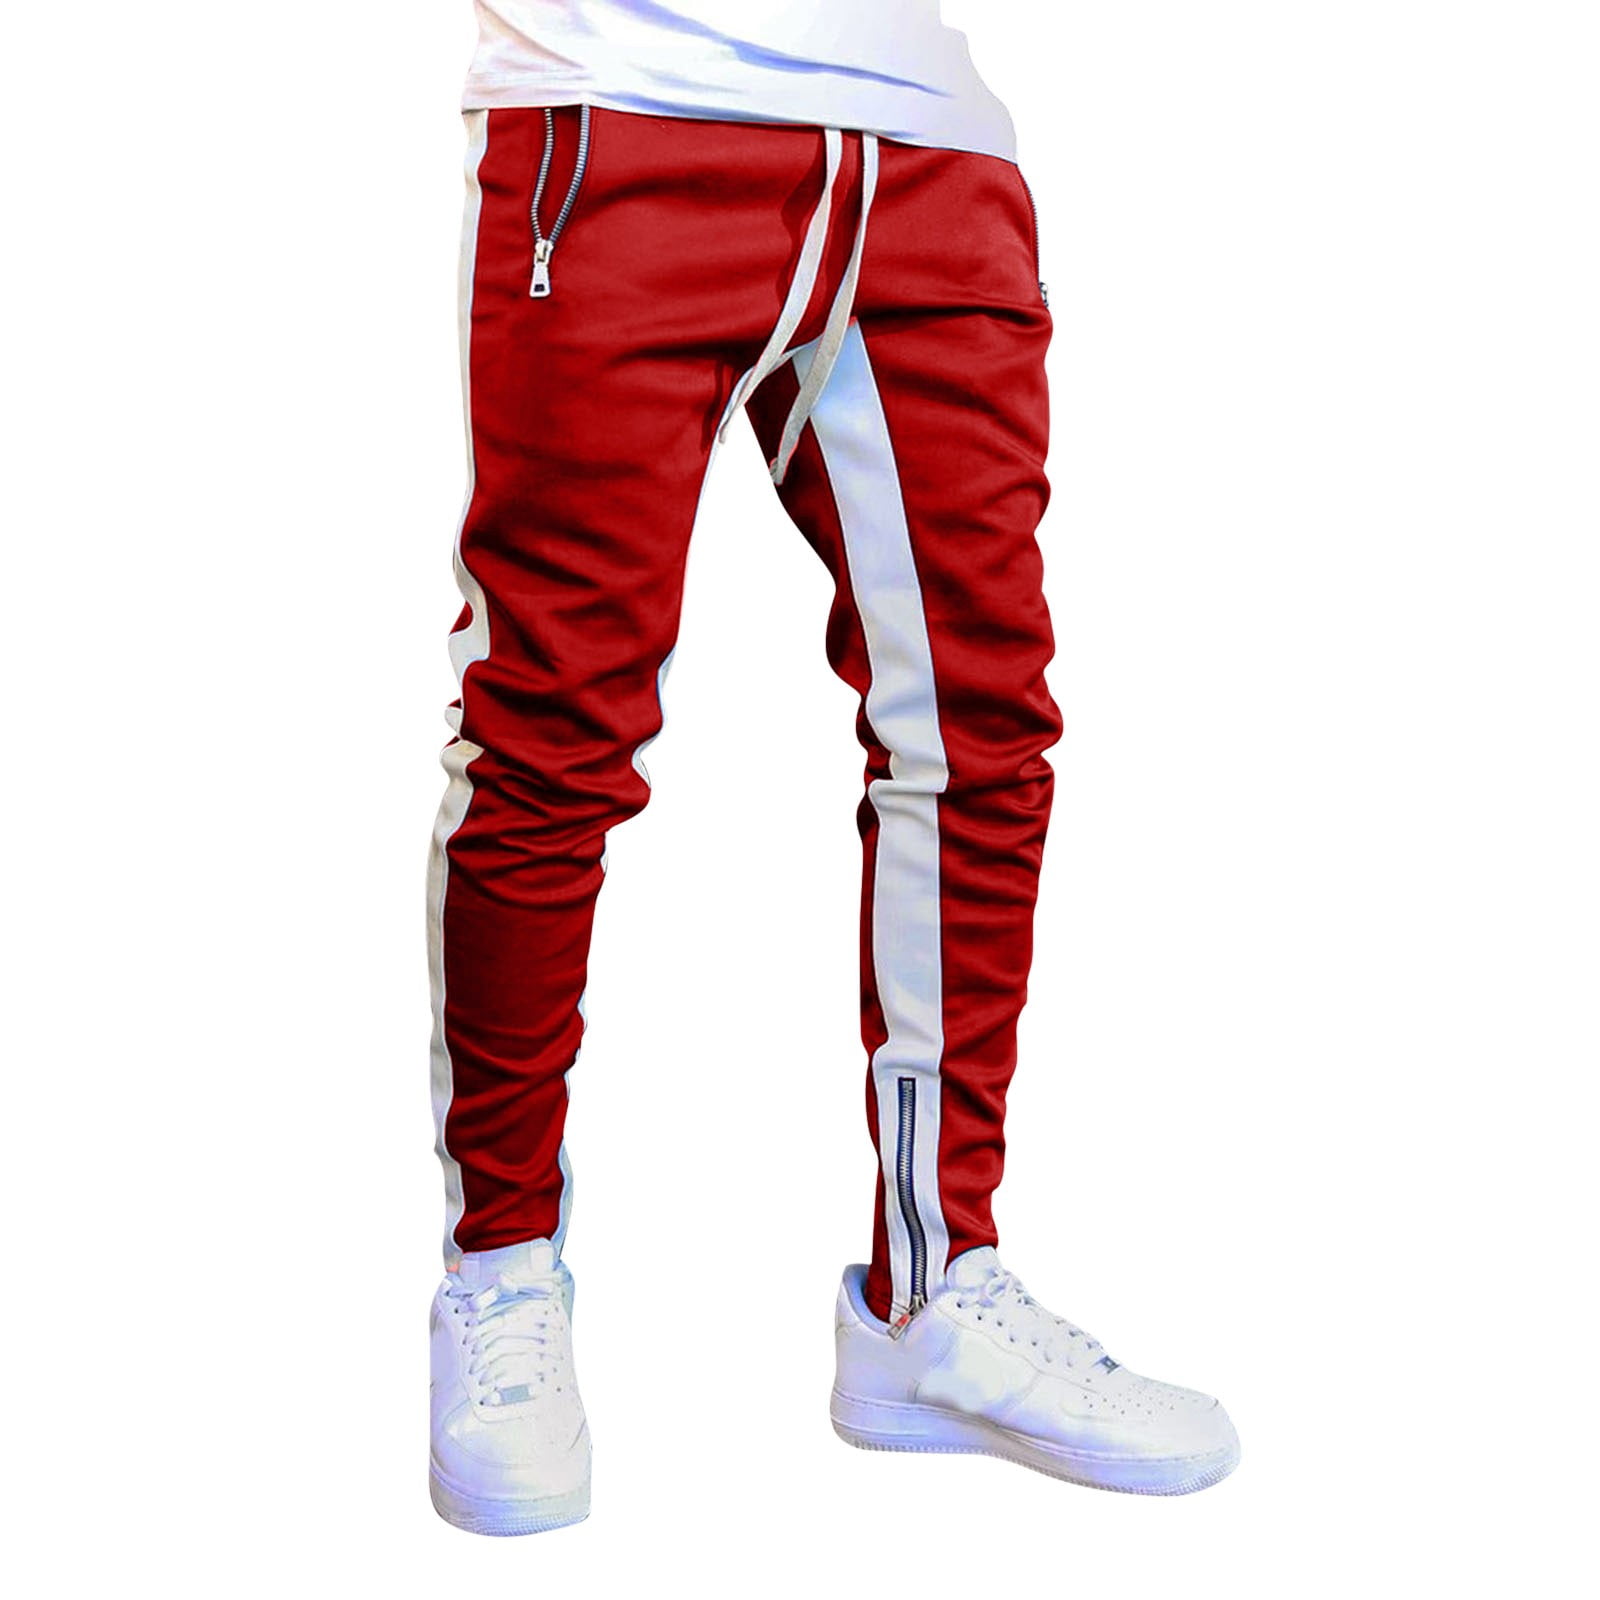 kpoplk Men's Joggers Sweatpants,3D Printed Beautiful Wreath Sweatpants  Men's Spandex Clothing Pants Man Trousers(Red,M) 